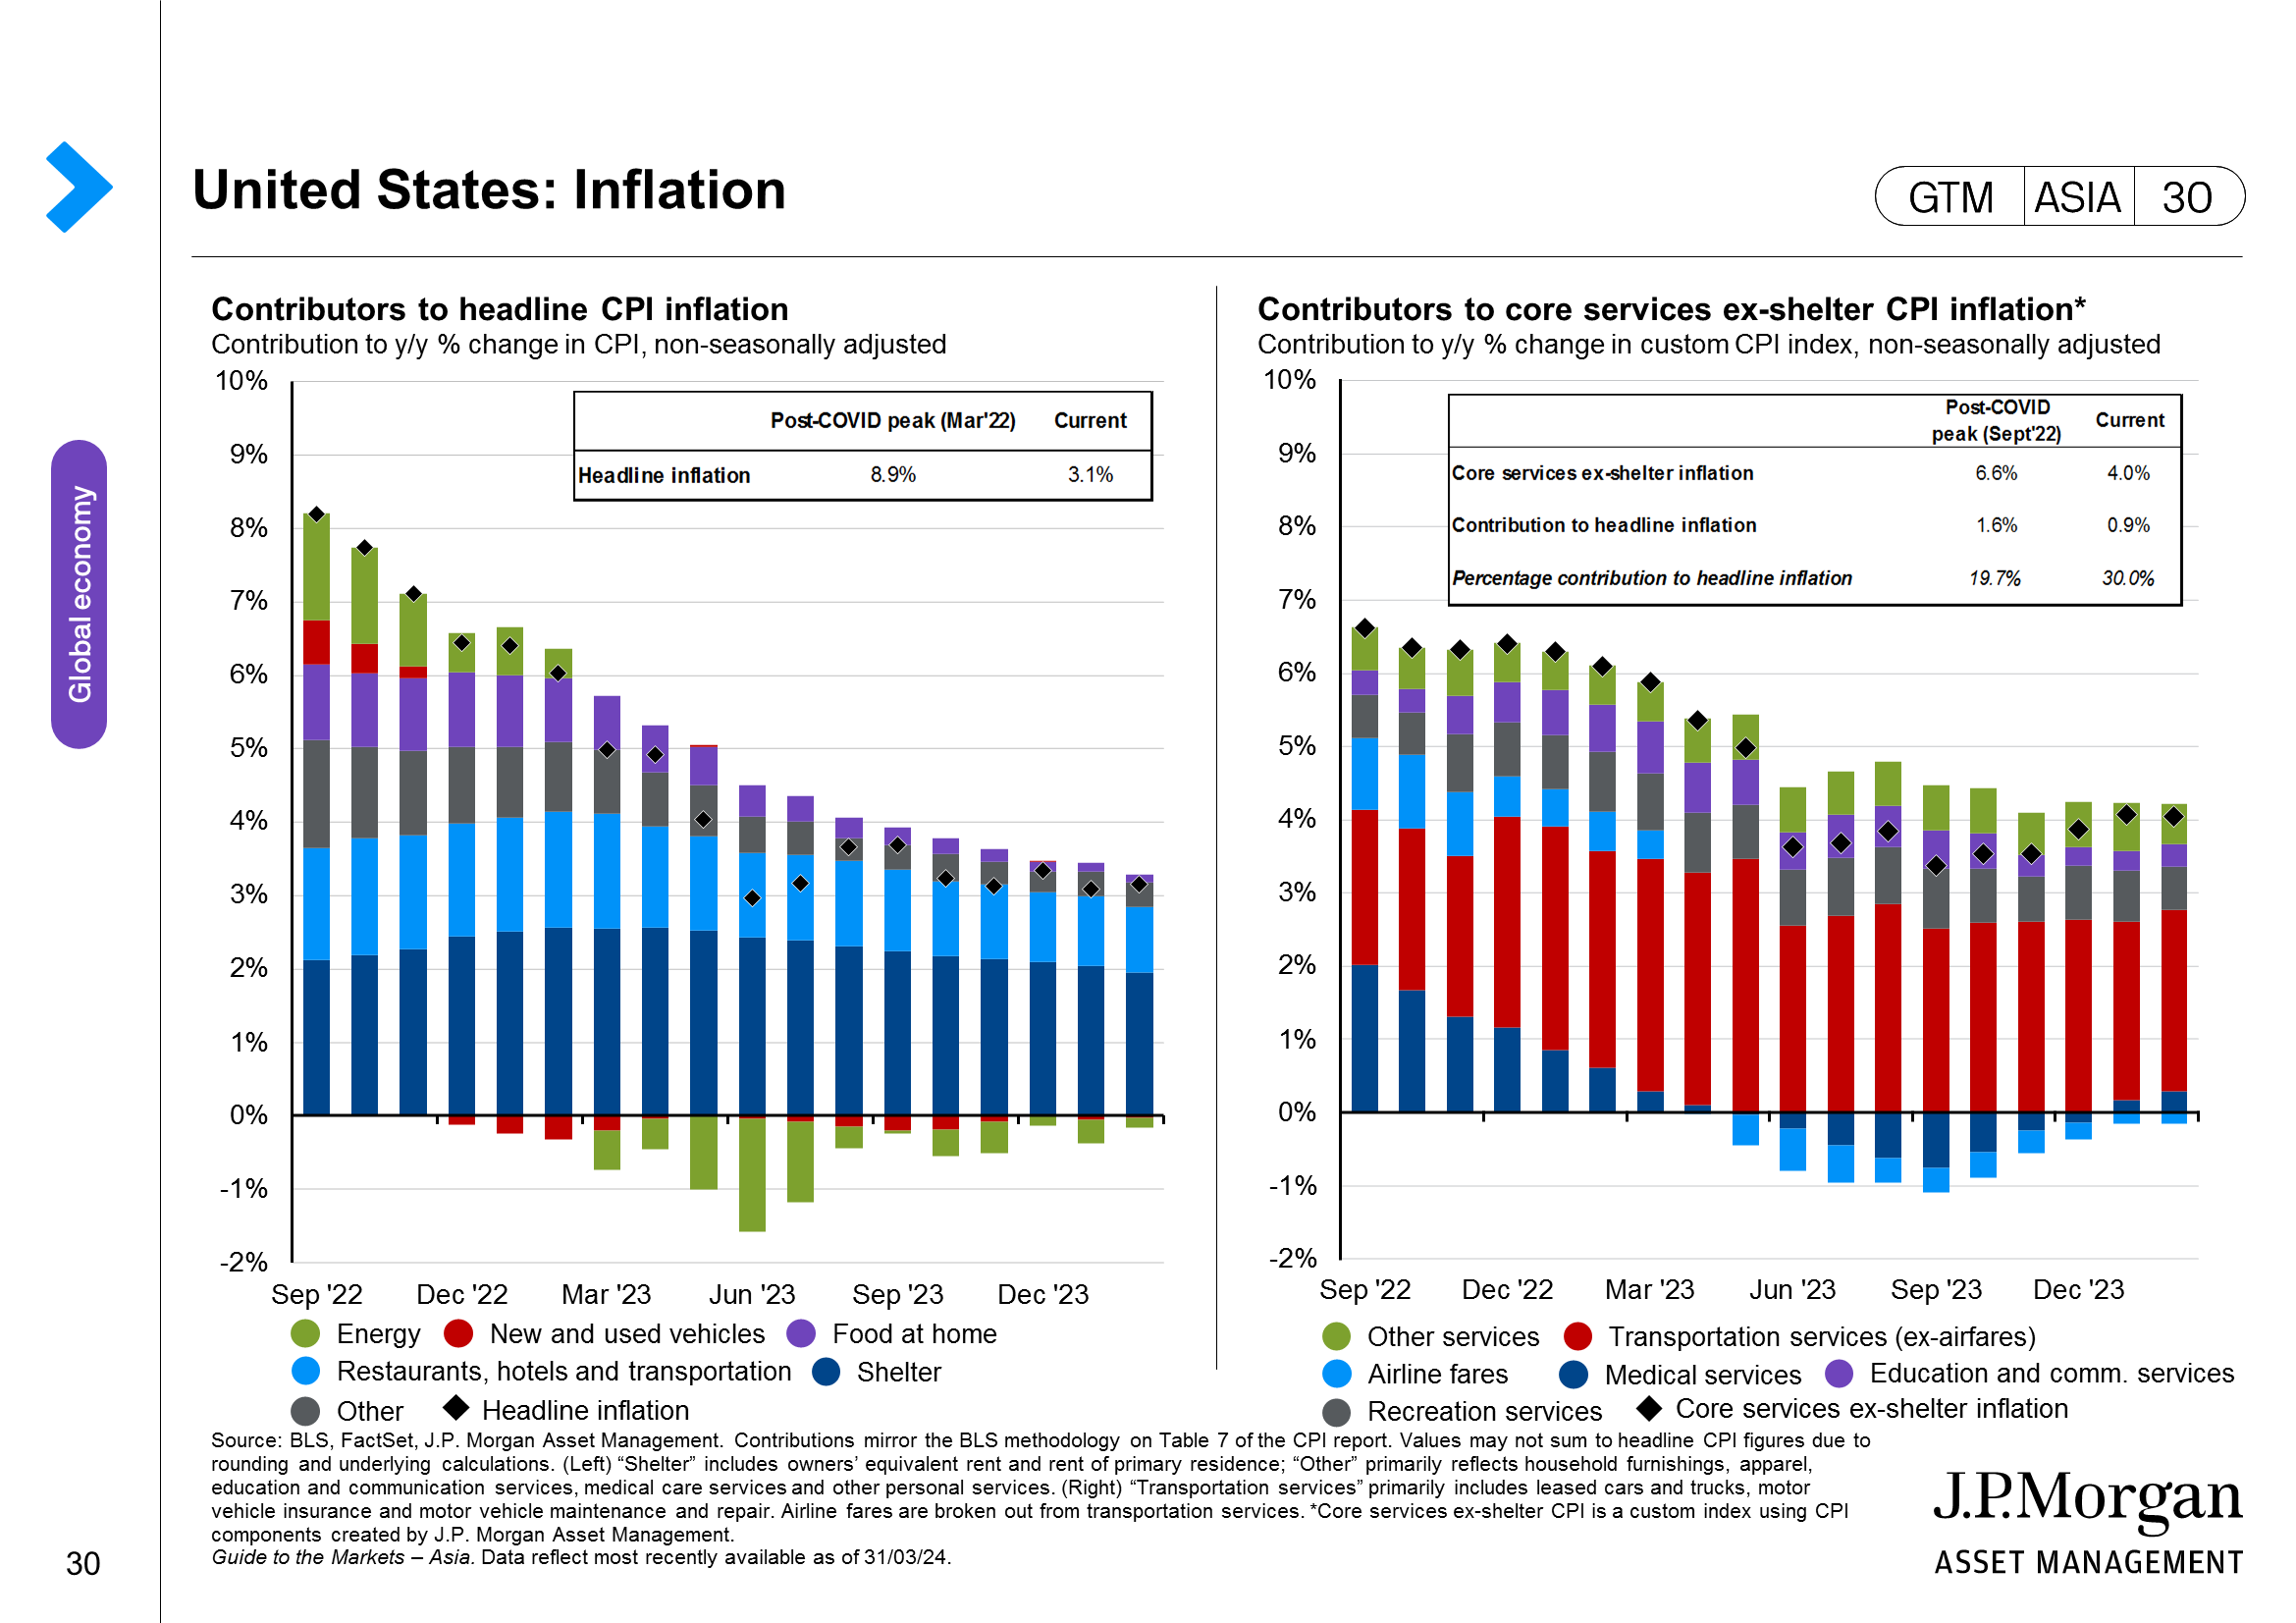 United States: Federal Reserve balance sheet